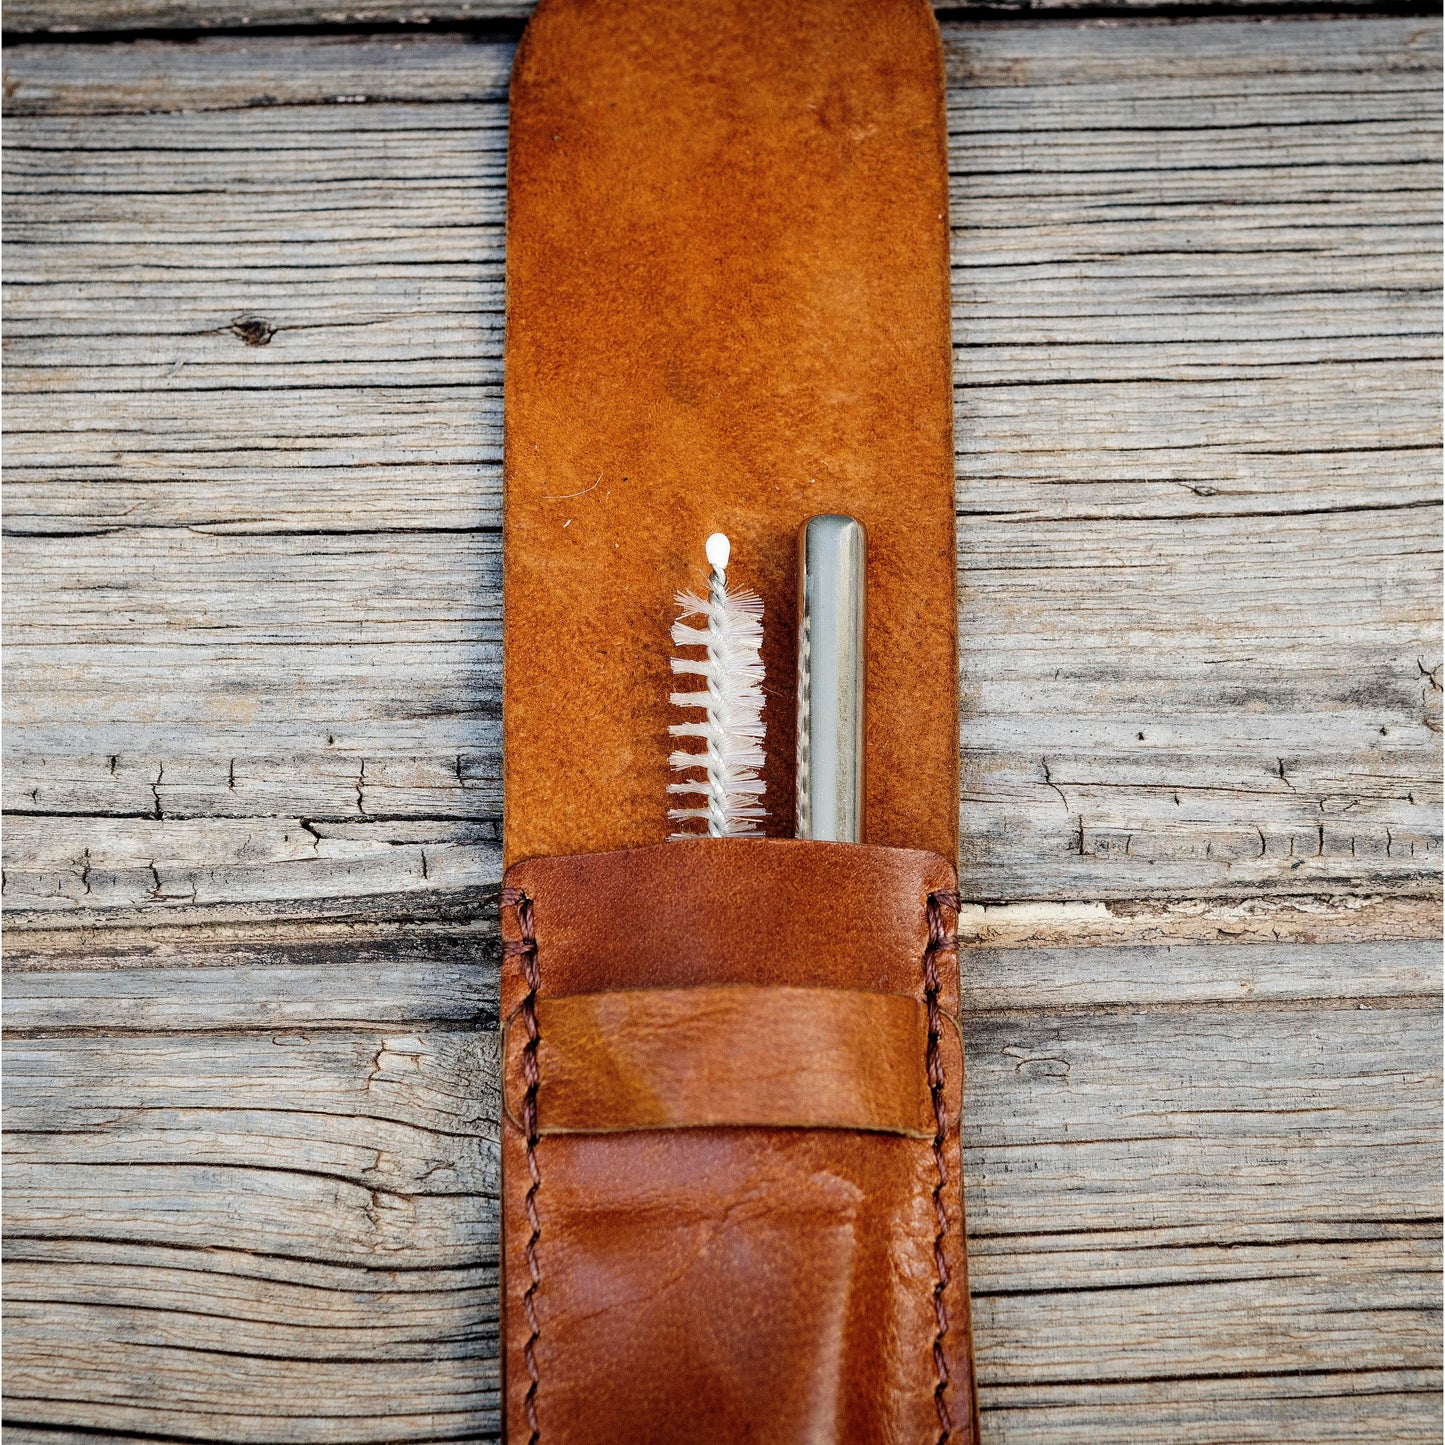 Leather Sustainable Straw Kit